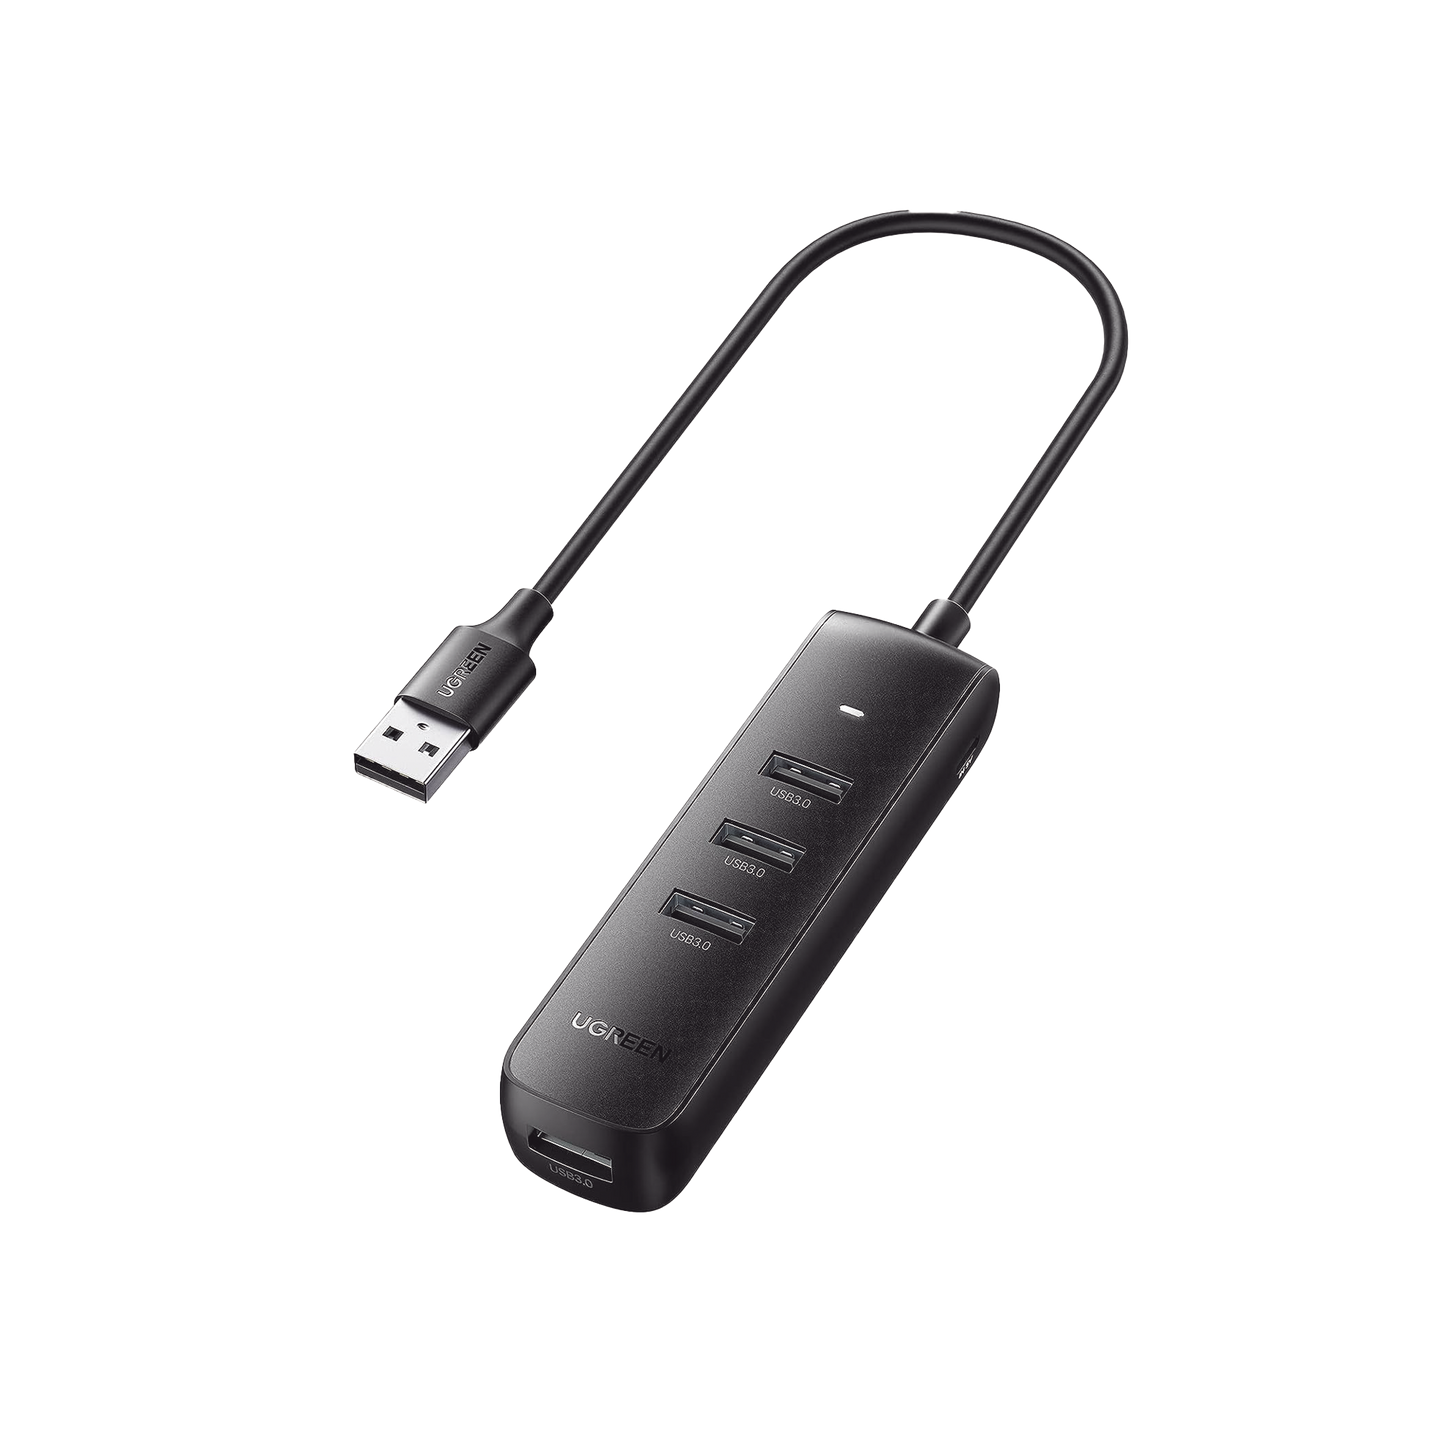 HUB USB-A 3.0 4 en 1 | 4 Puertos USB-A 3.0 (5Gbps) | Cable de 25 cm | Indicador Led | Ideal para Transferencia de Datos | Entrada USB-C para alimentar equipos de mayor consumo como discos duros | Color Negro.